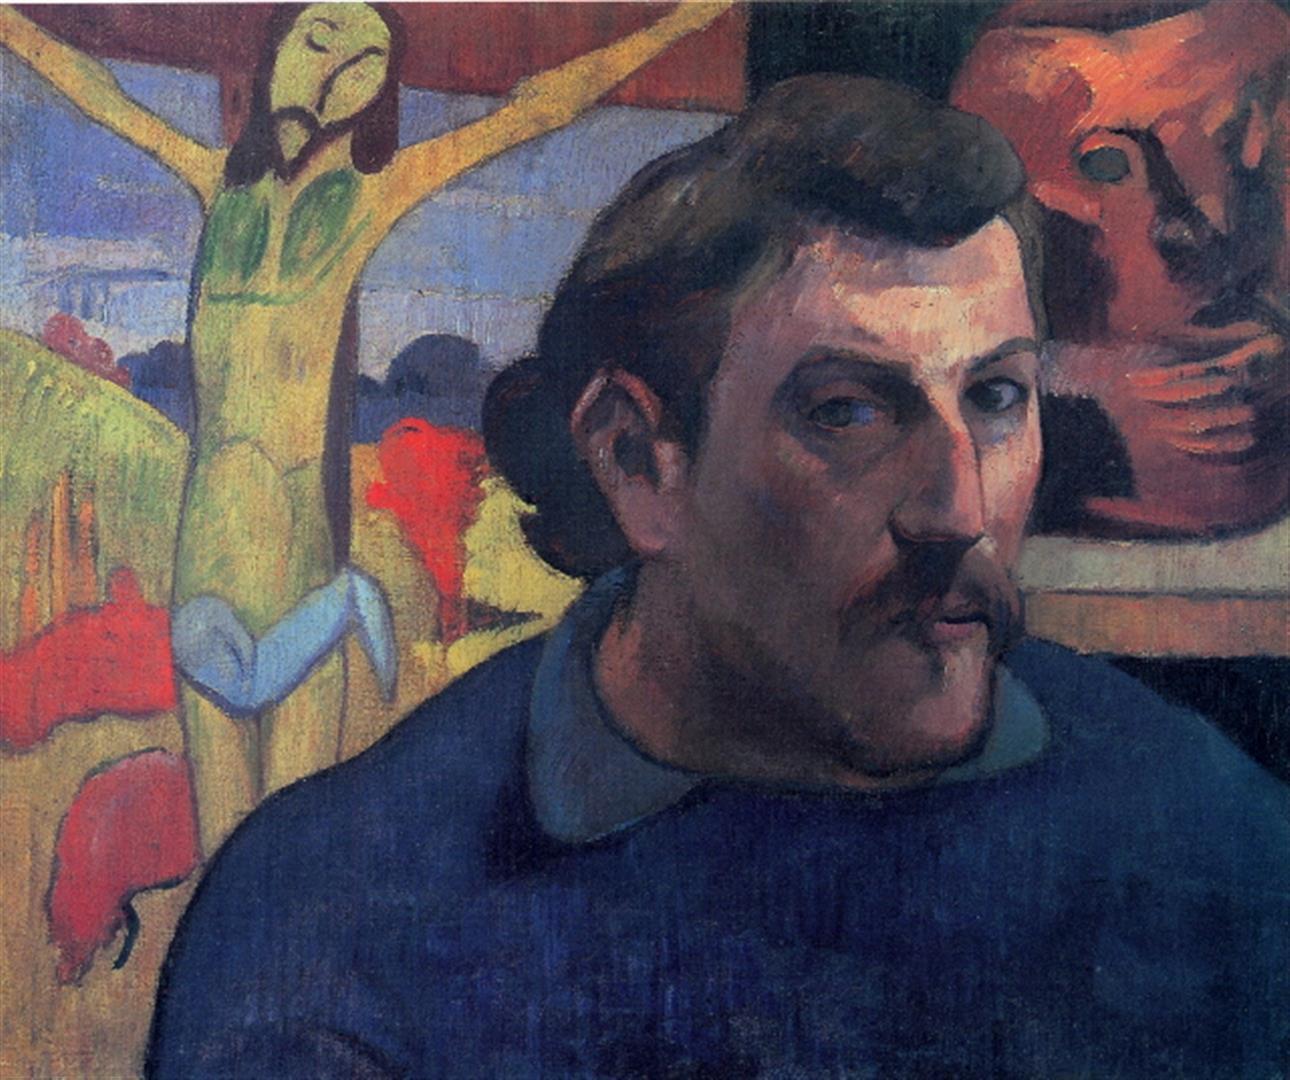 Paul Gauguin - Self Portrait with Yellow Christ